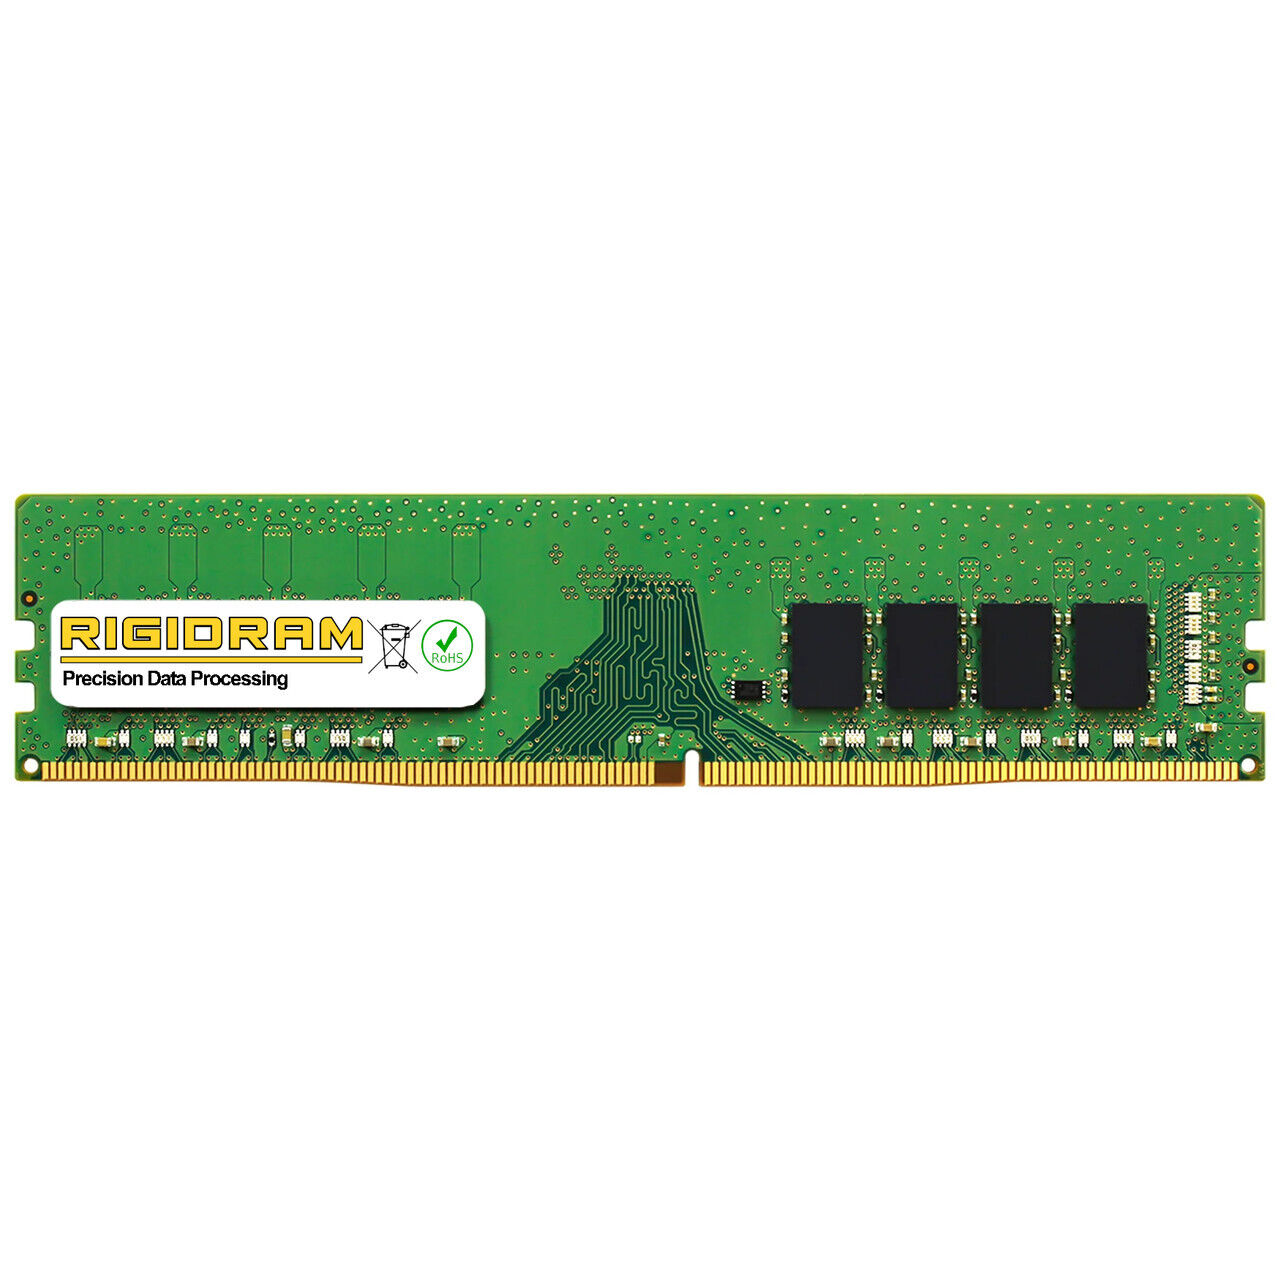 16GB RAM HP Desktop Pro A G2 DDR4 Memory RigidRAM Upgrades